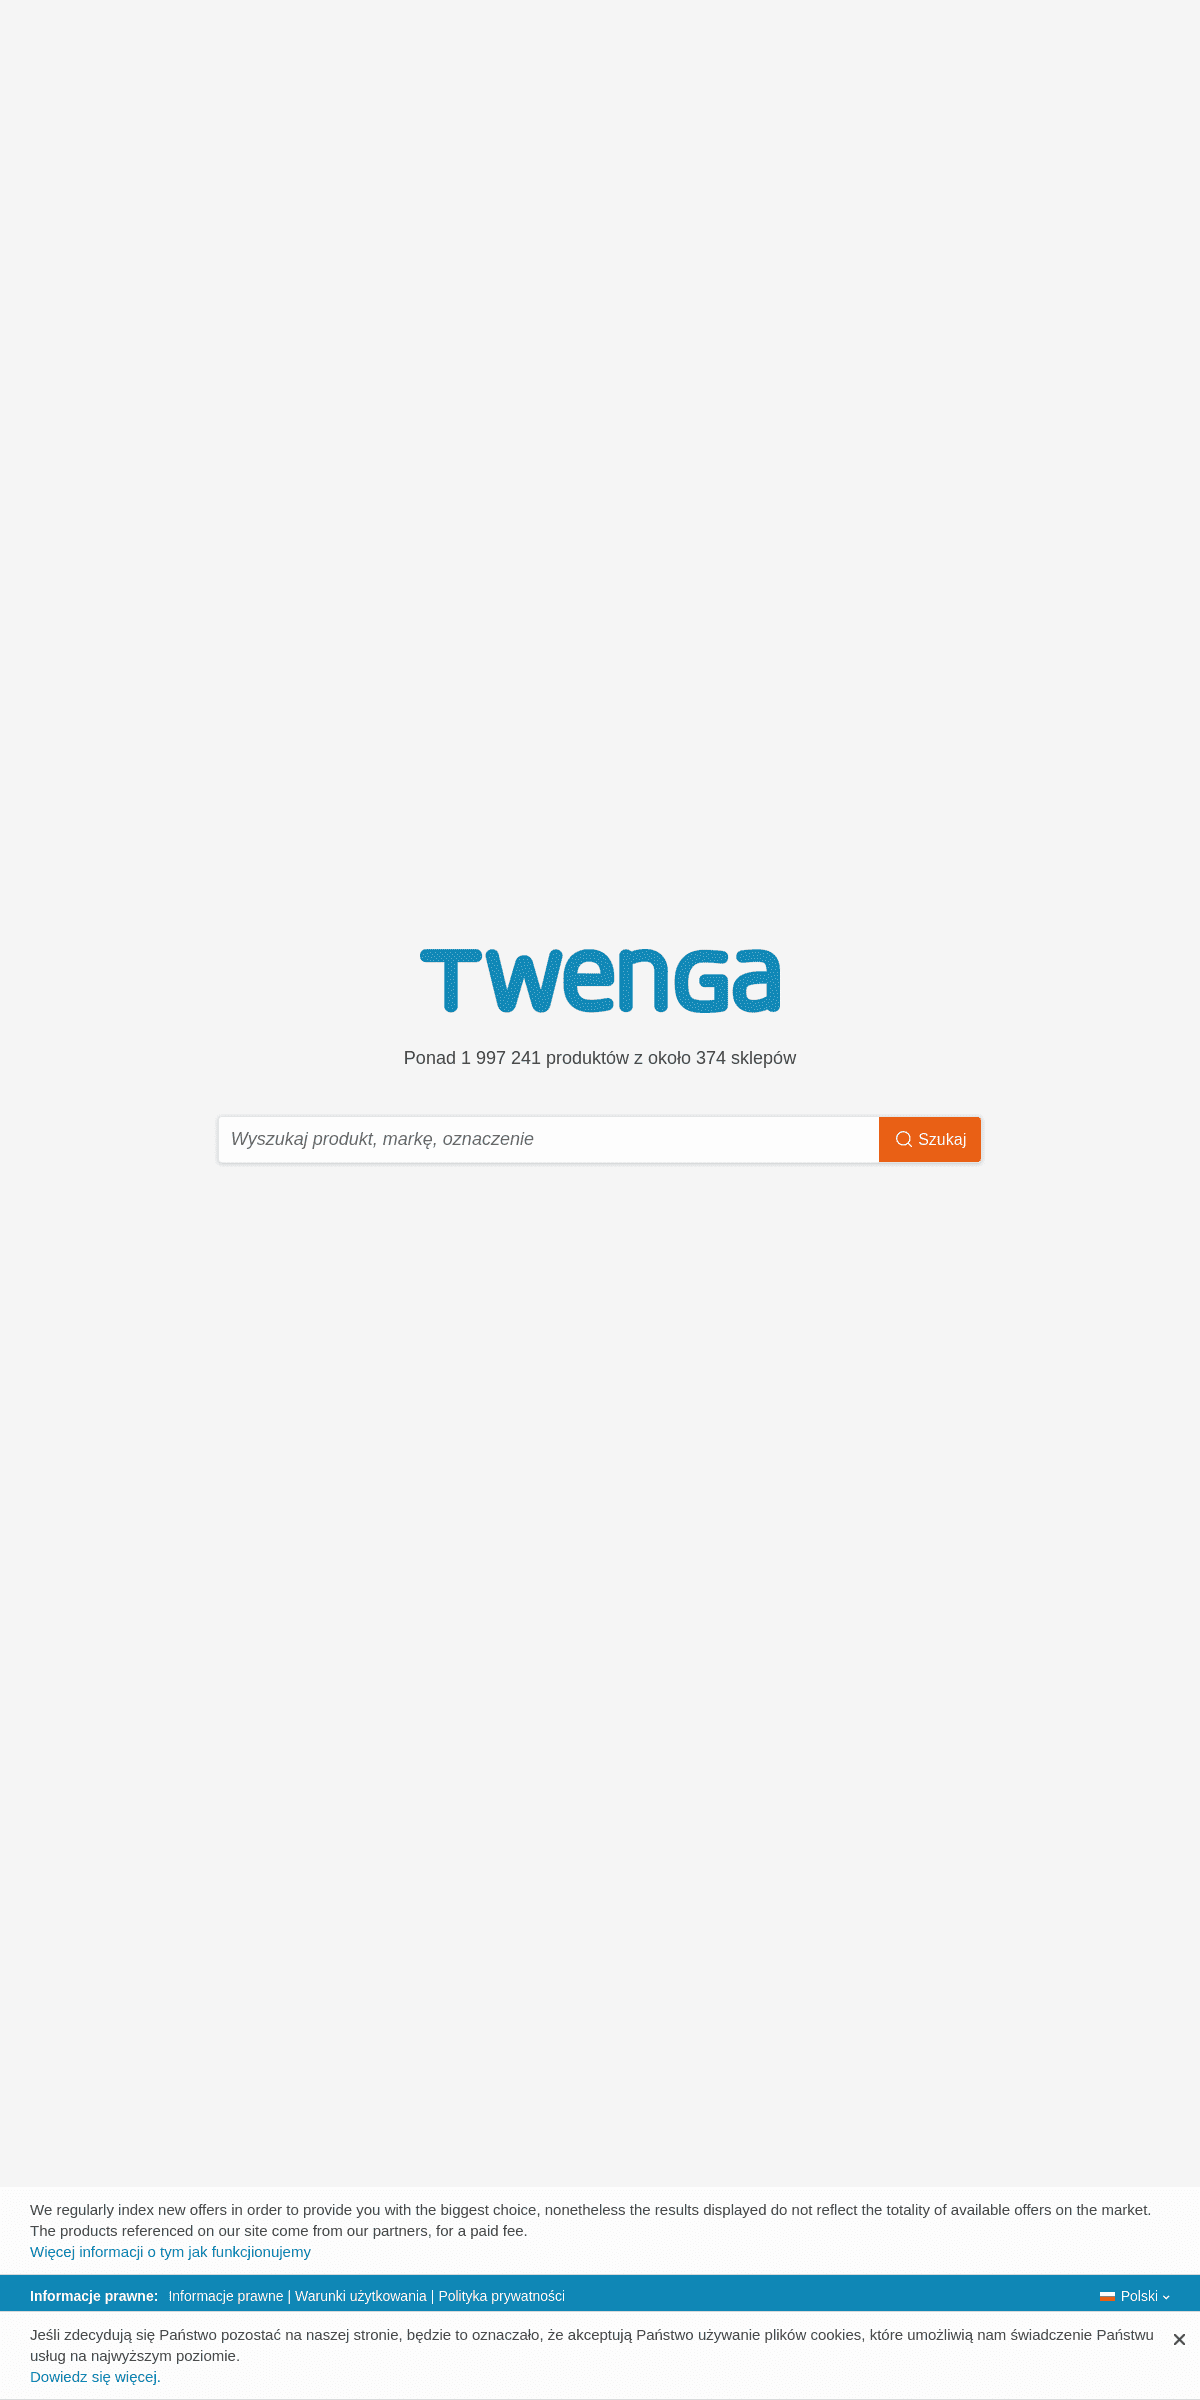 A complete backup of twenga.pl